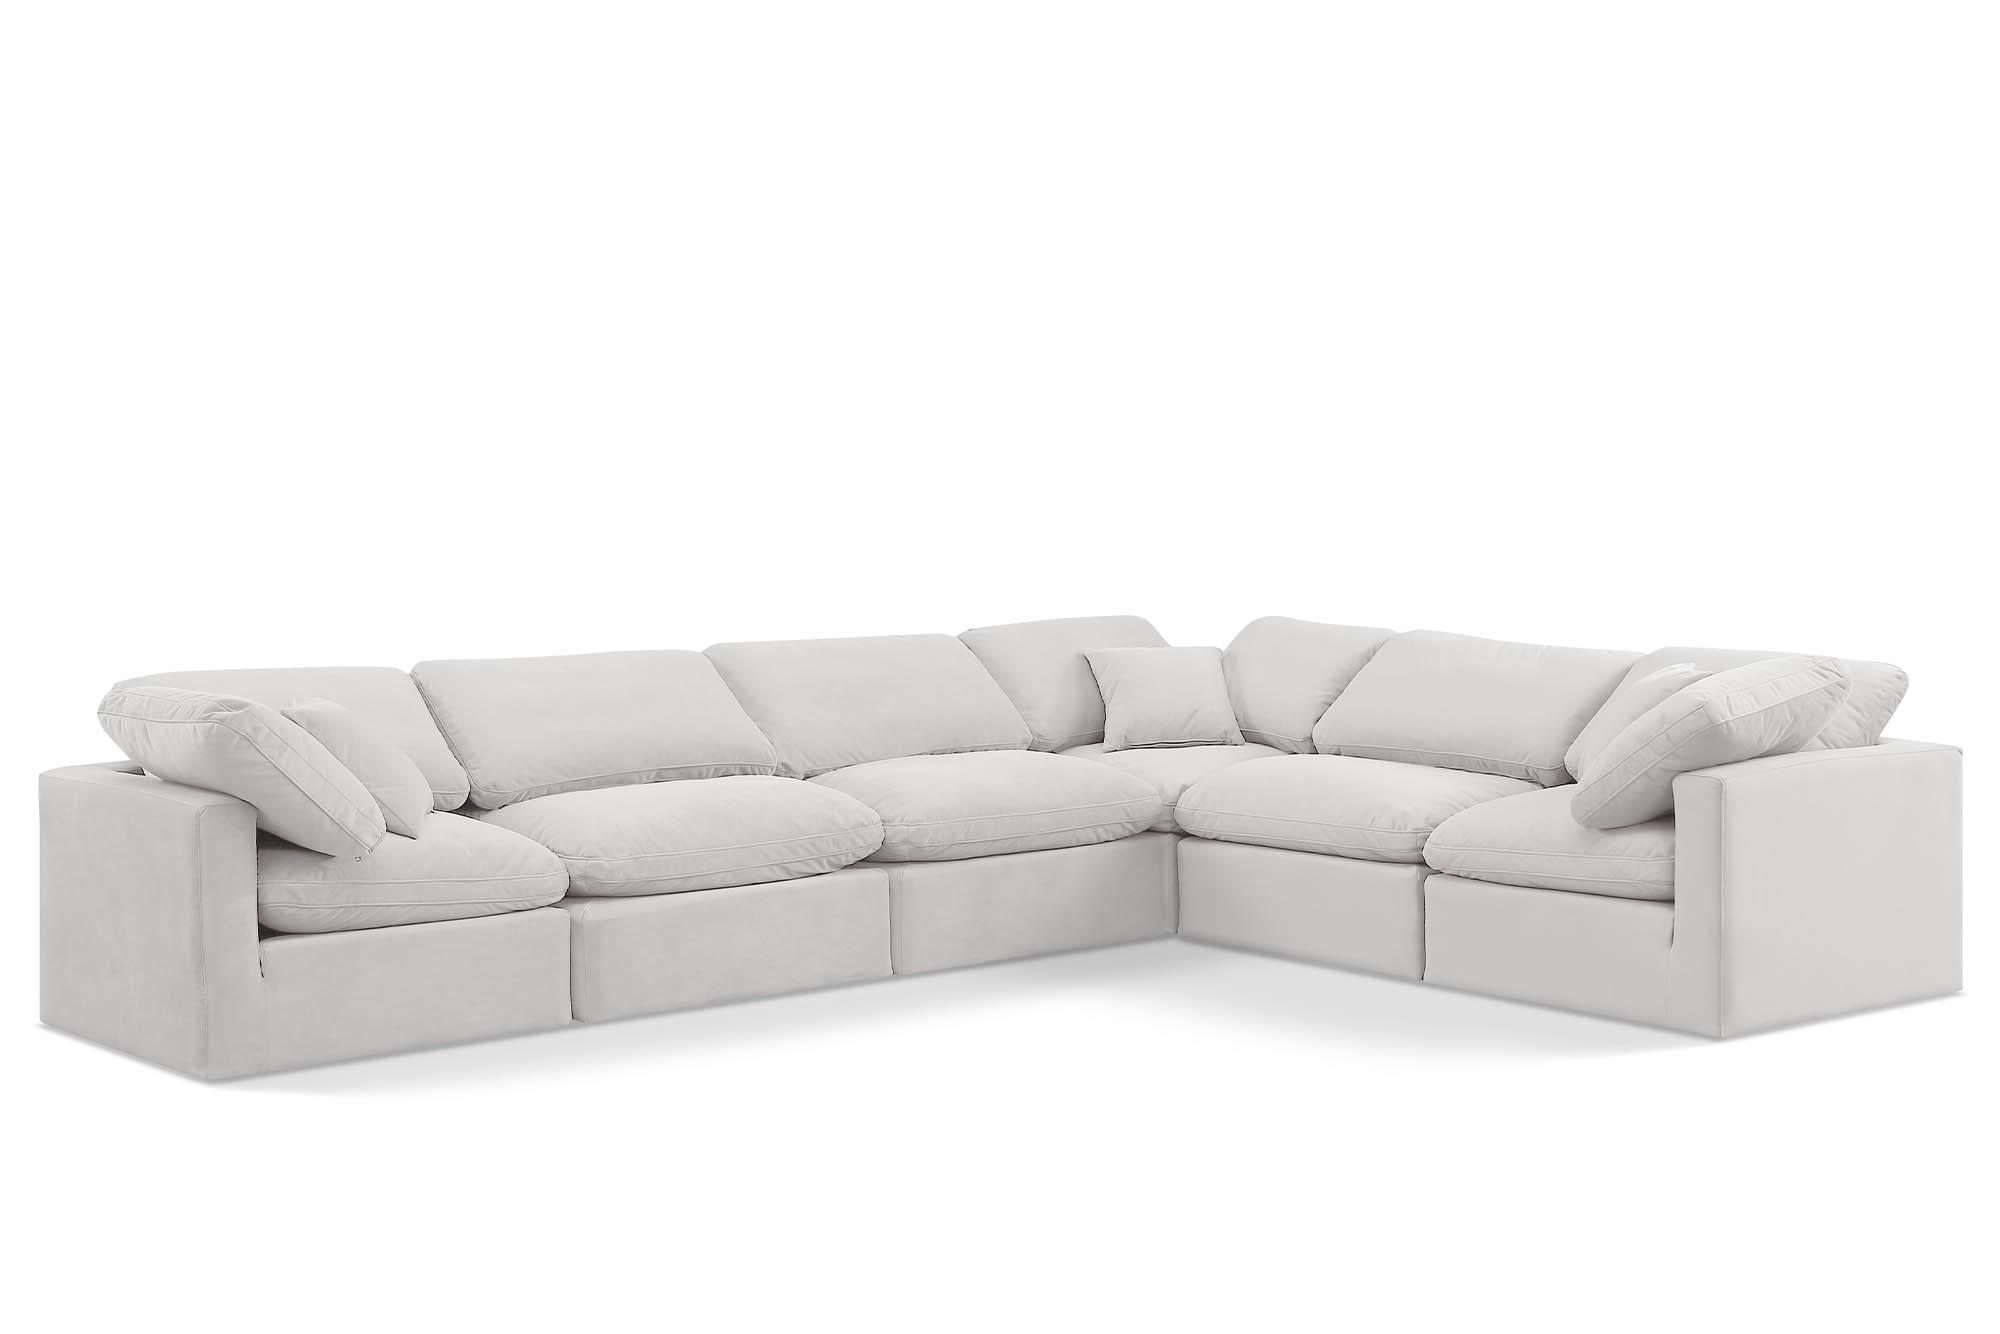 Contemporary, Modern Modular Sectional Sofa INDULGE 147Cream-Sec6A 147Cream-Sec6A in Cream Velvet